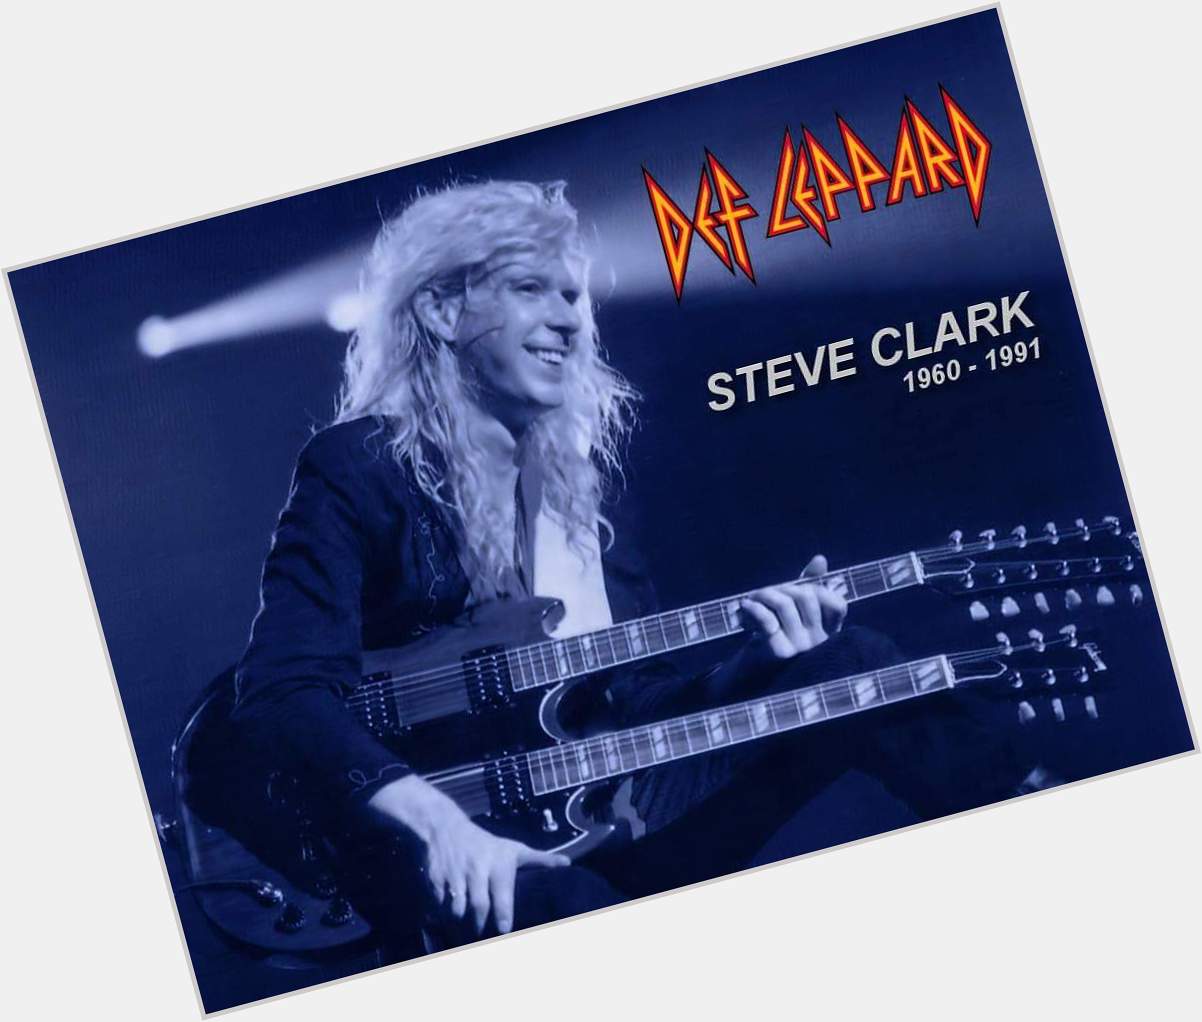 Happy birthday to the late guitarist Steve Clark. RIP 